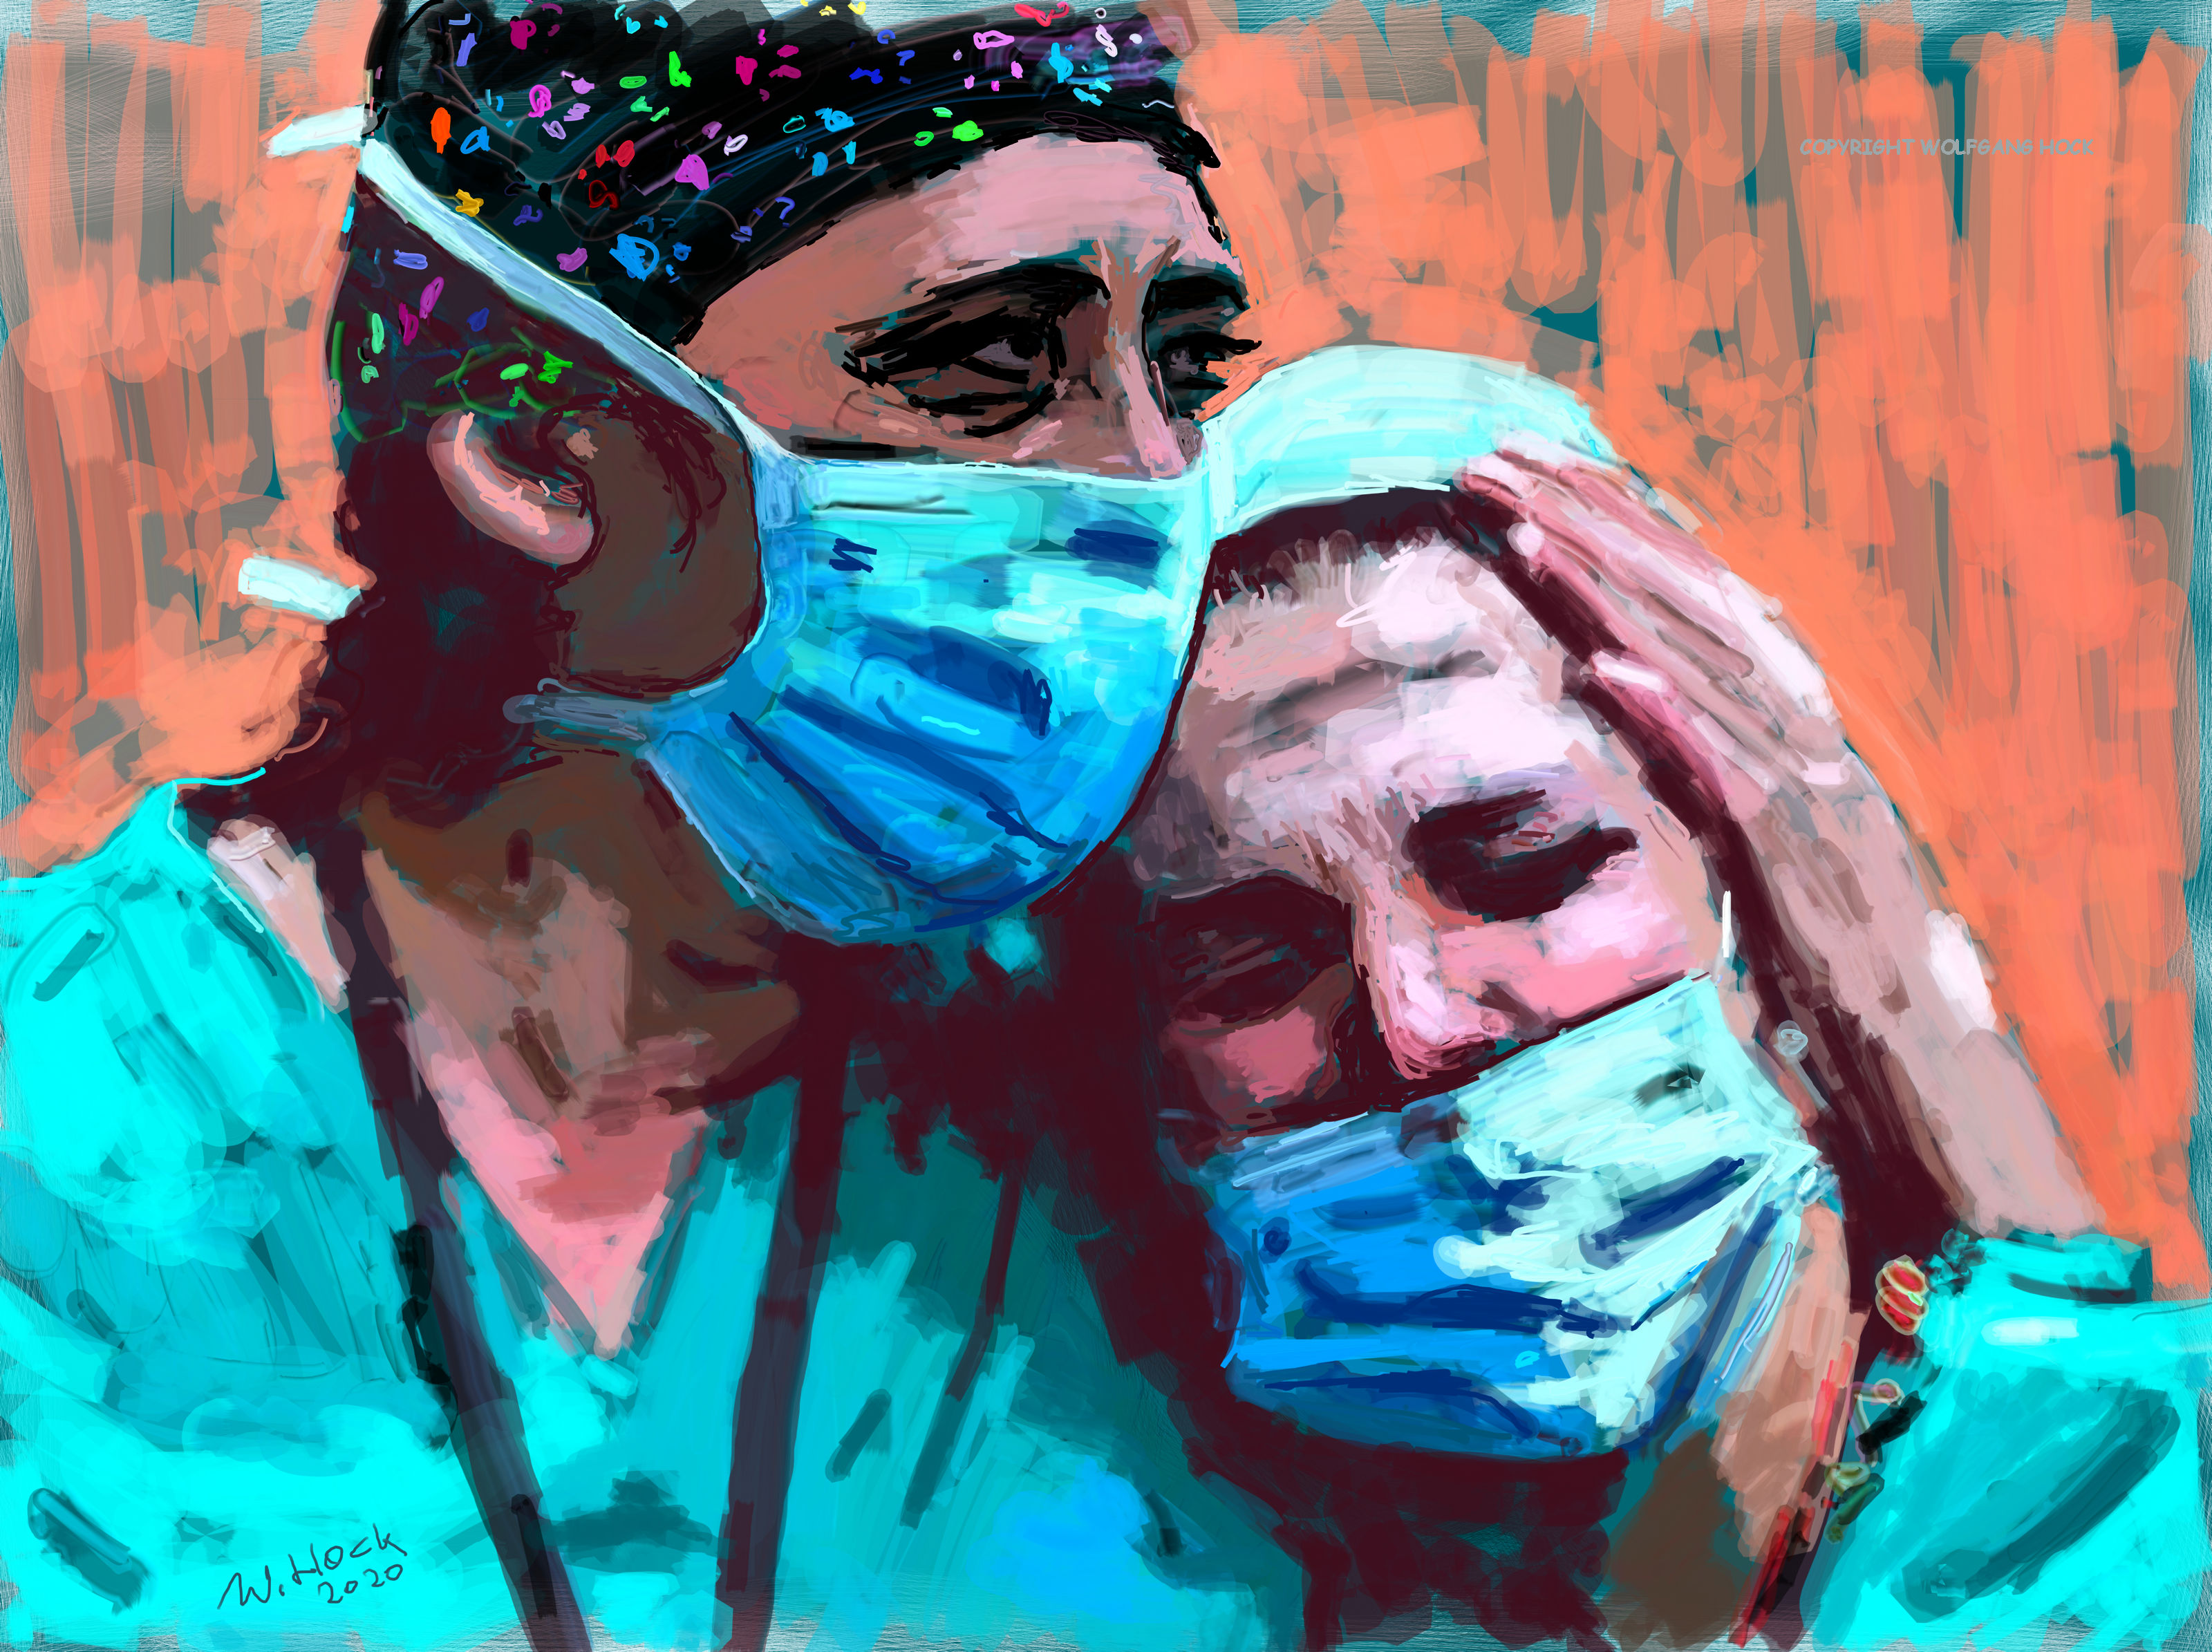 Zwei Krankenschwestern - Two nurses - Duas enfermeiras 2020   Handmade digital painting on canvas 140 x 105 cm (200 megapixels)